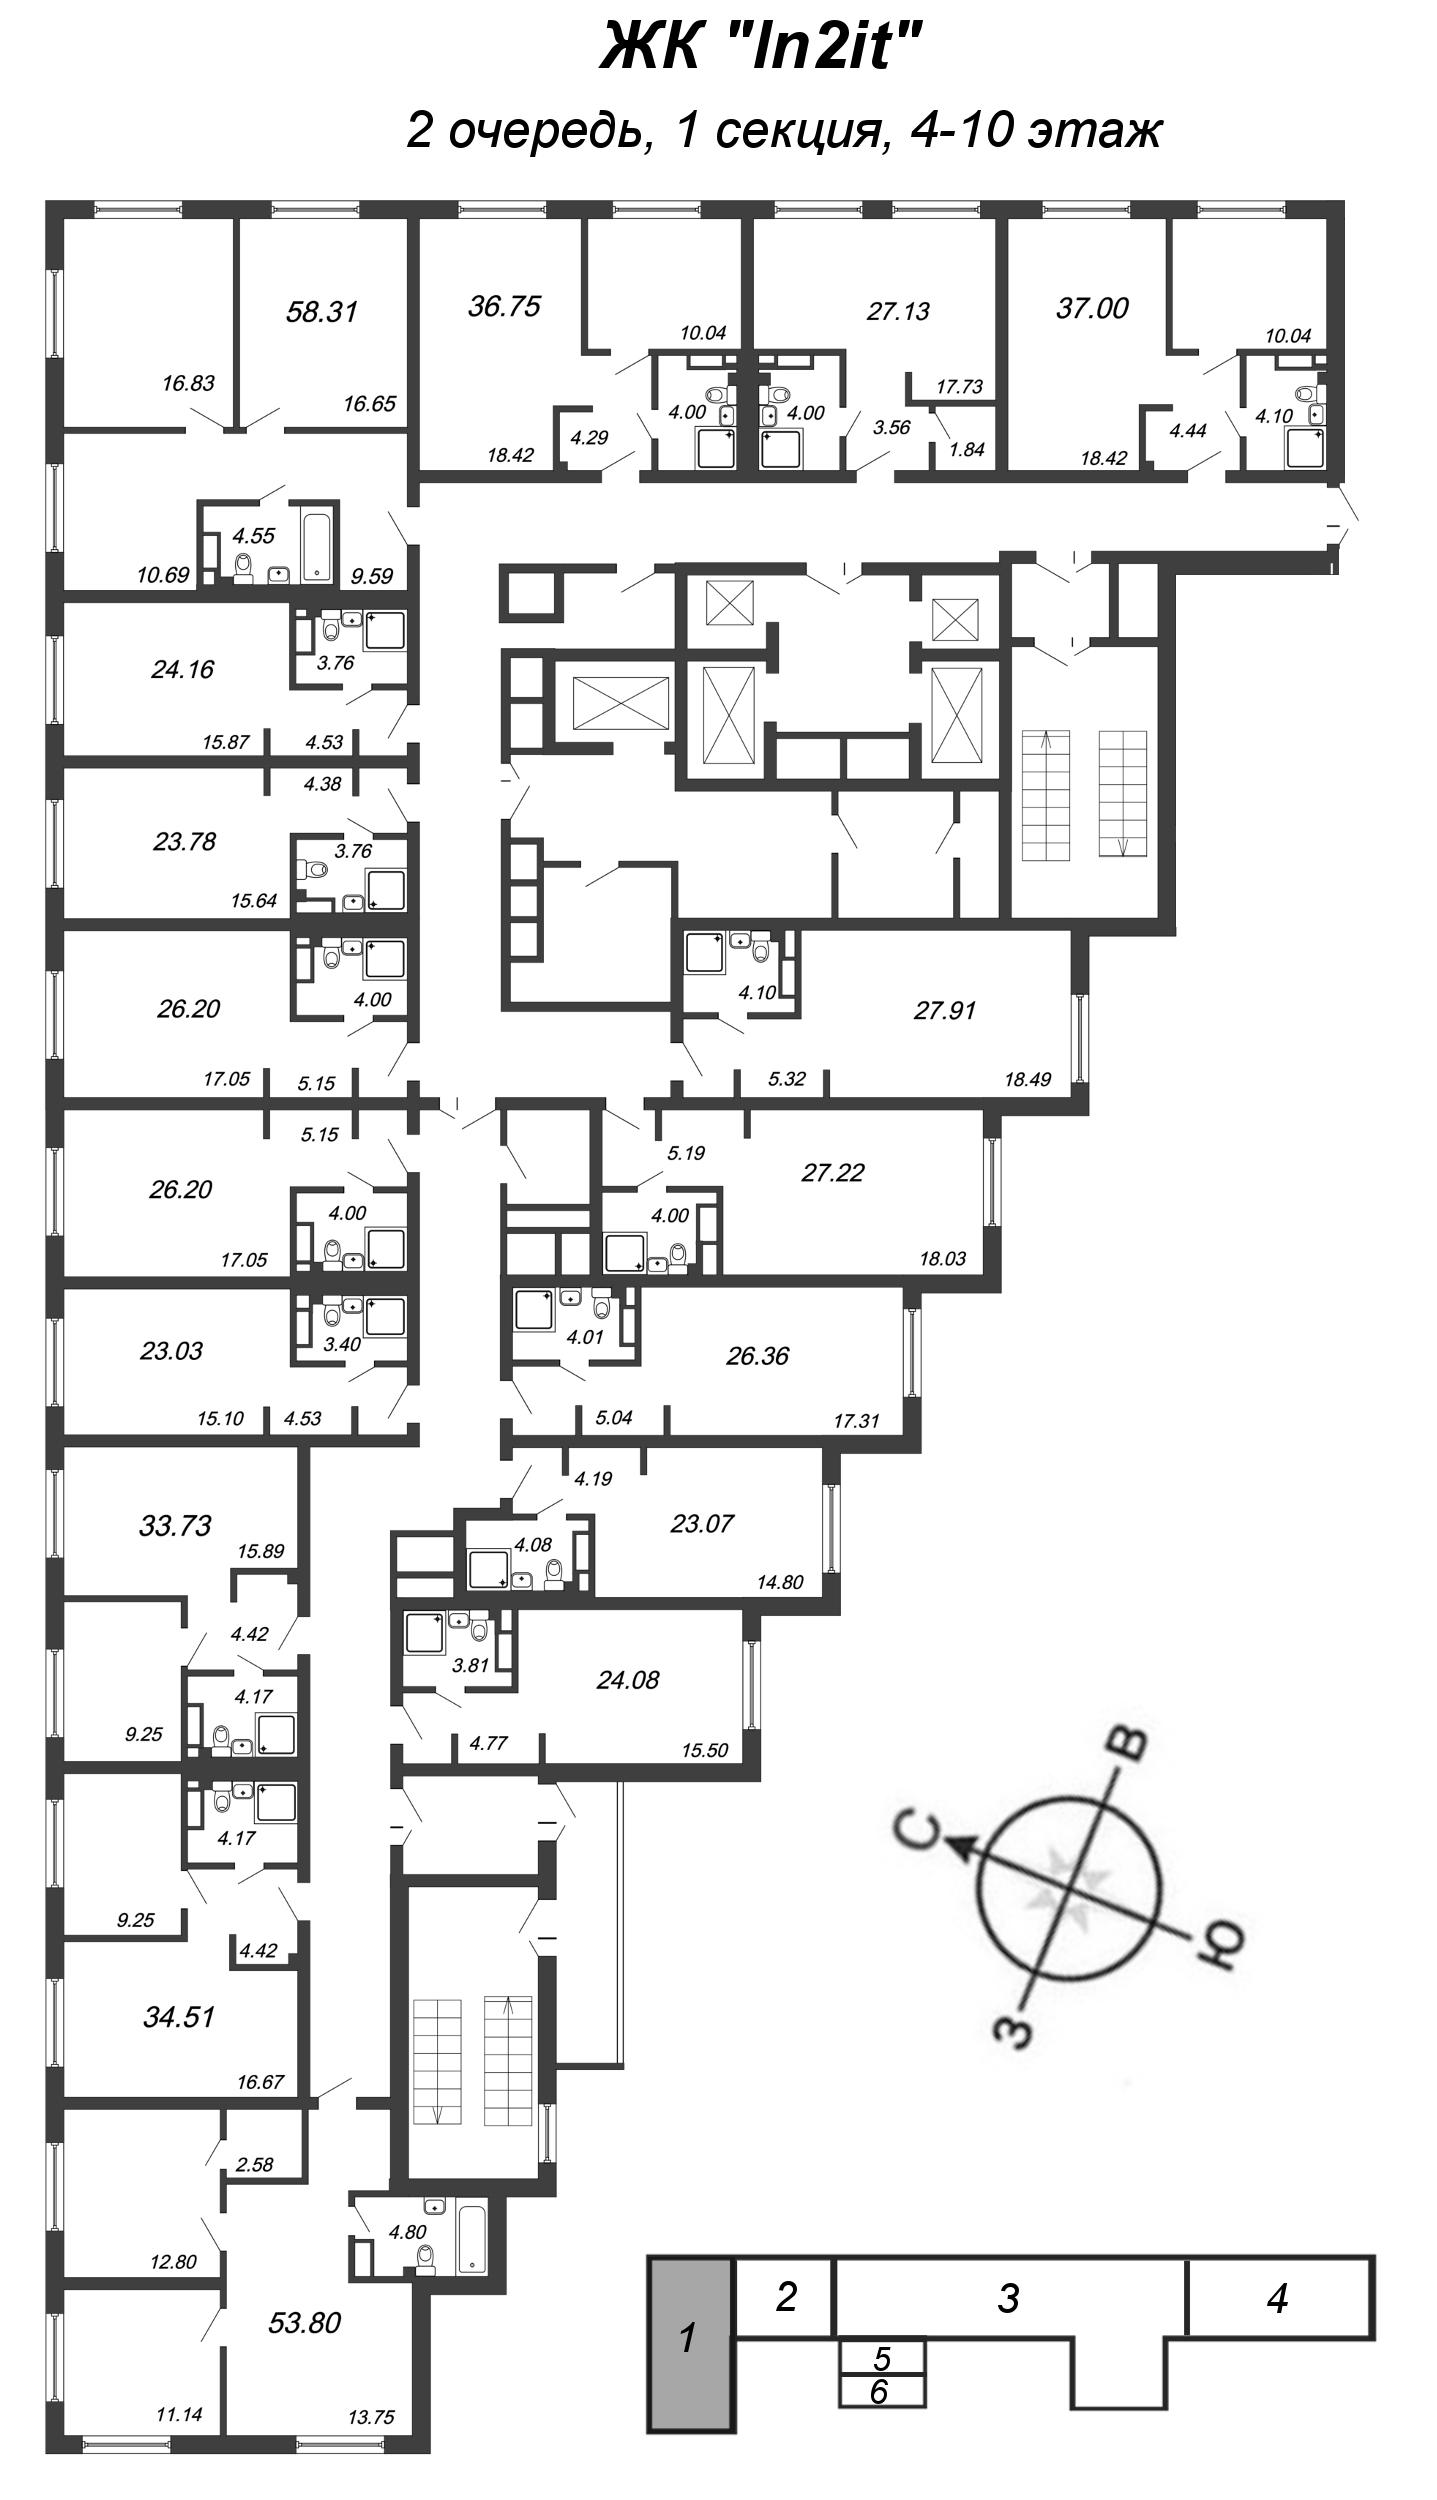 2-комнатная квартира, 58.31 м² в ЖК "In2it" - планировка этажа